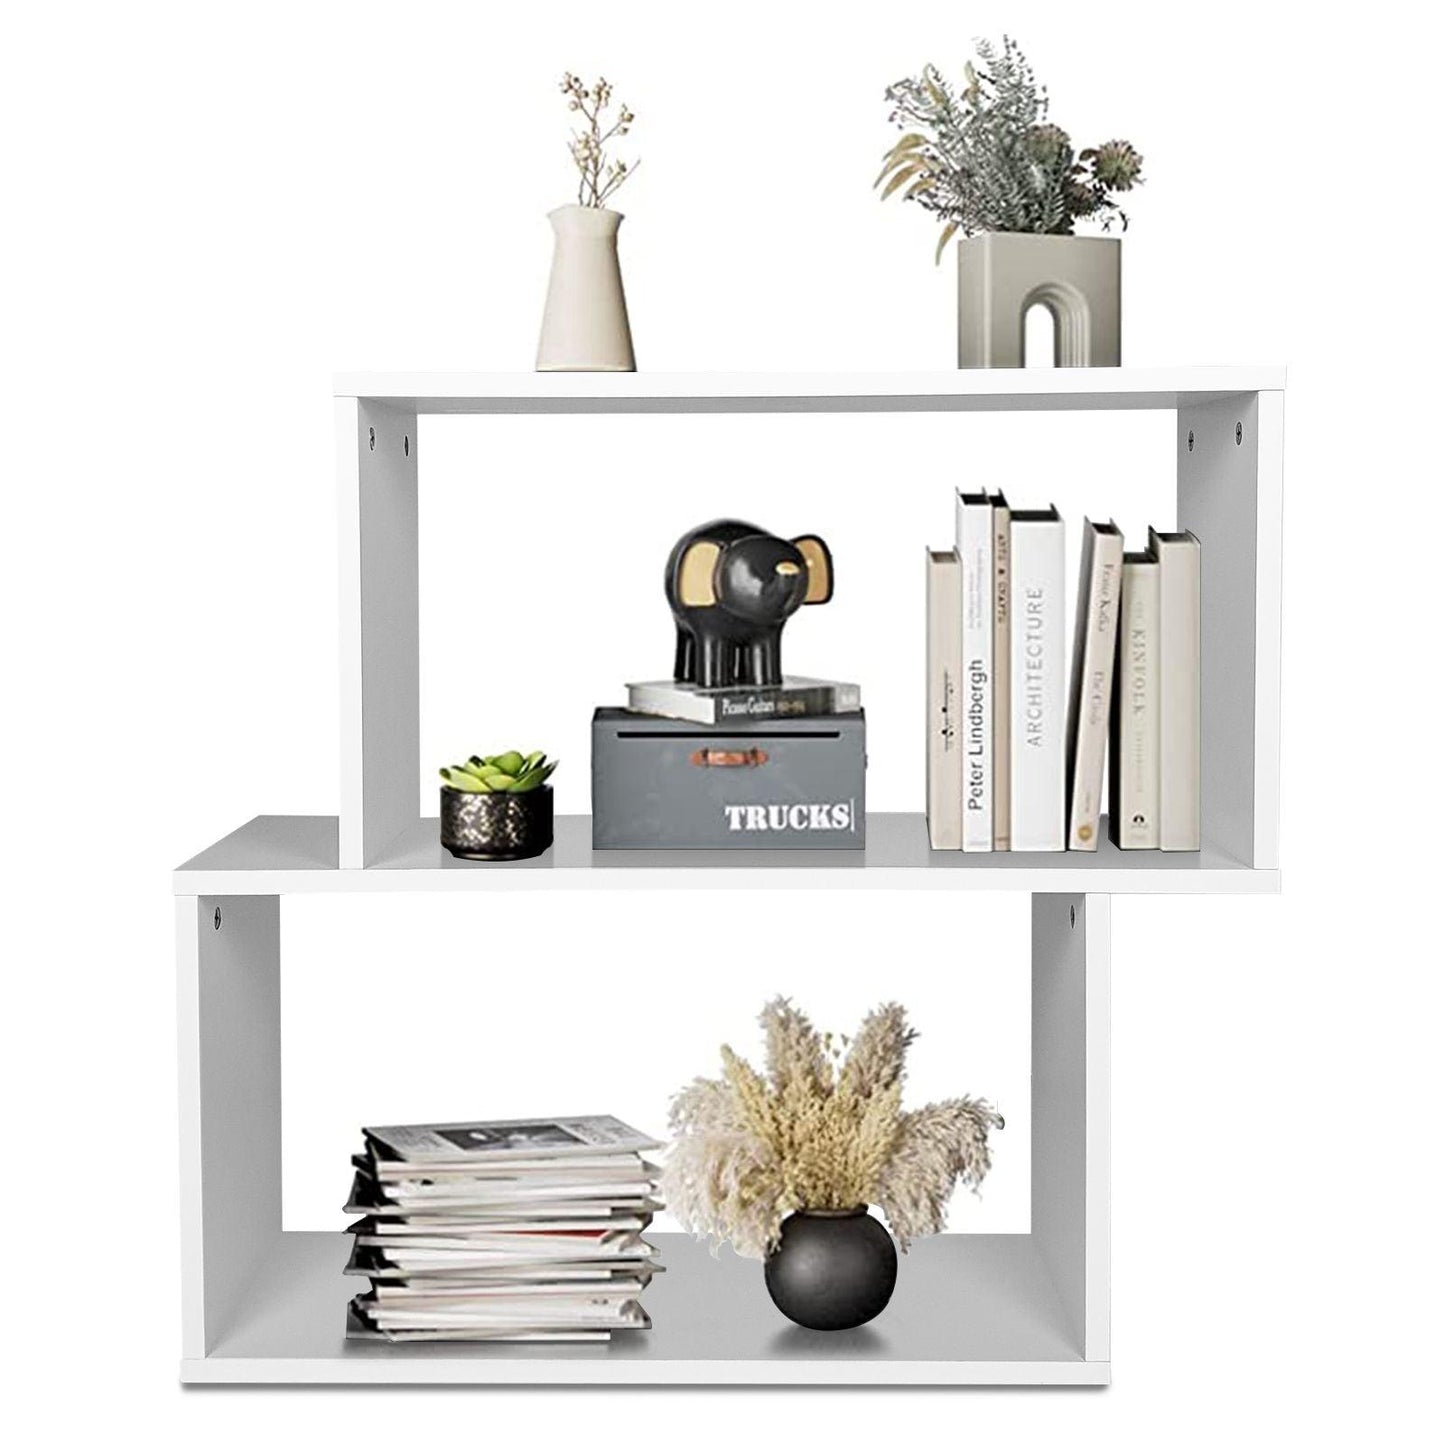 Irregular Wooden Bookshelf: Home Office Storage - Click